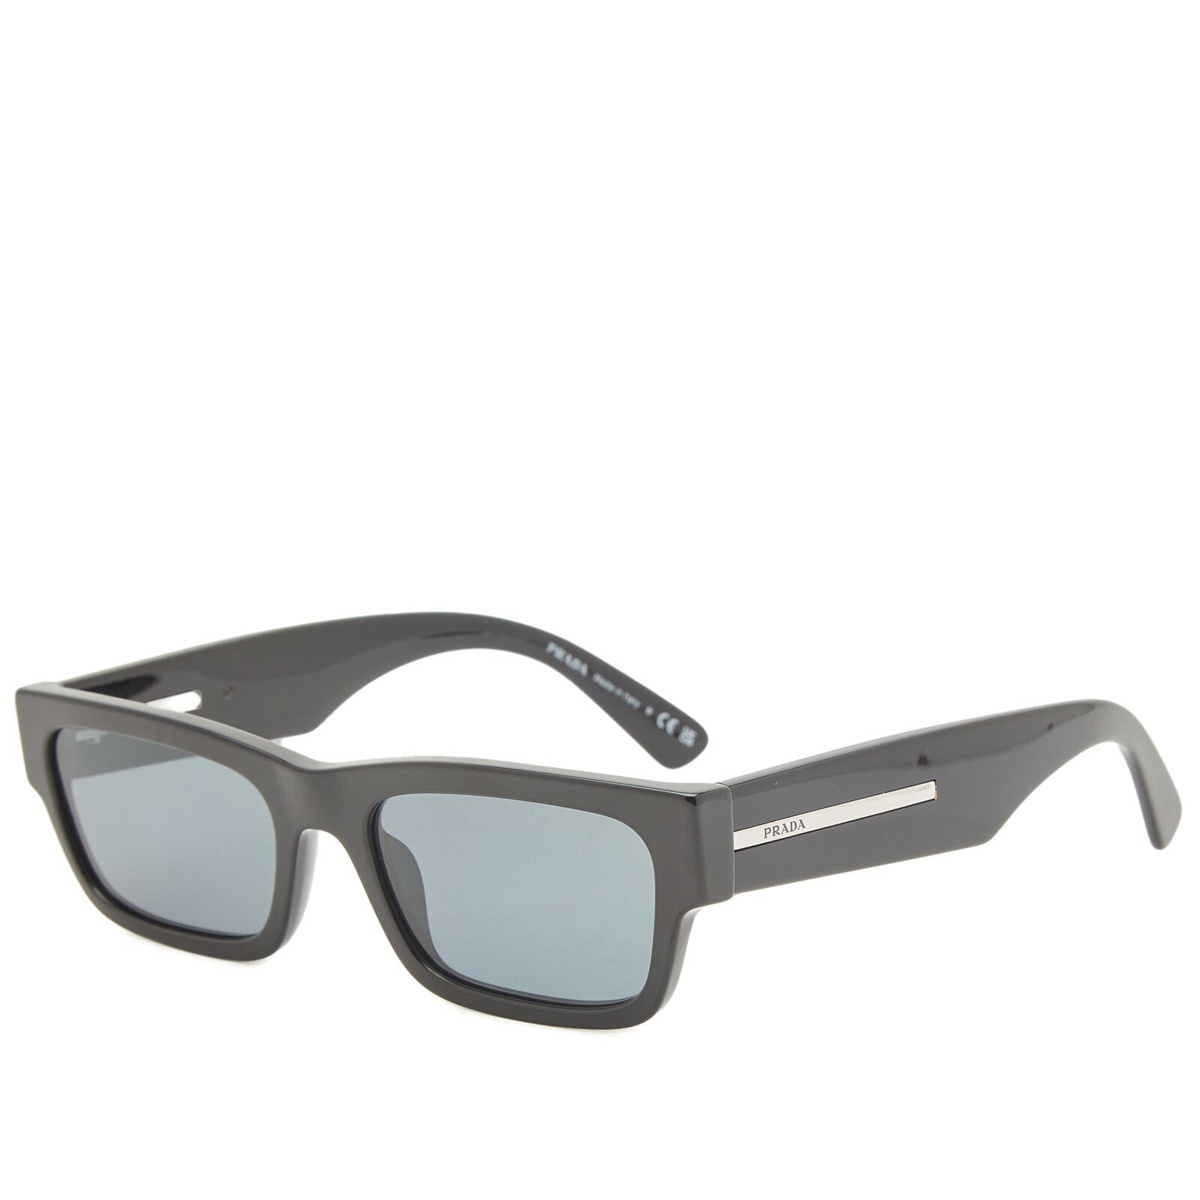 Prada Eyewear Black Mirrored Sunglasses Prada